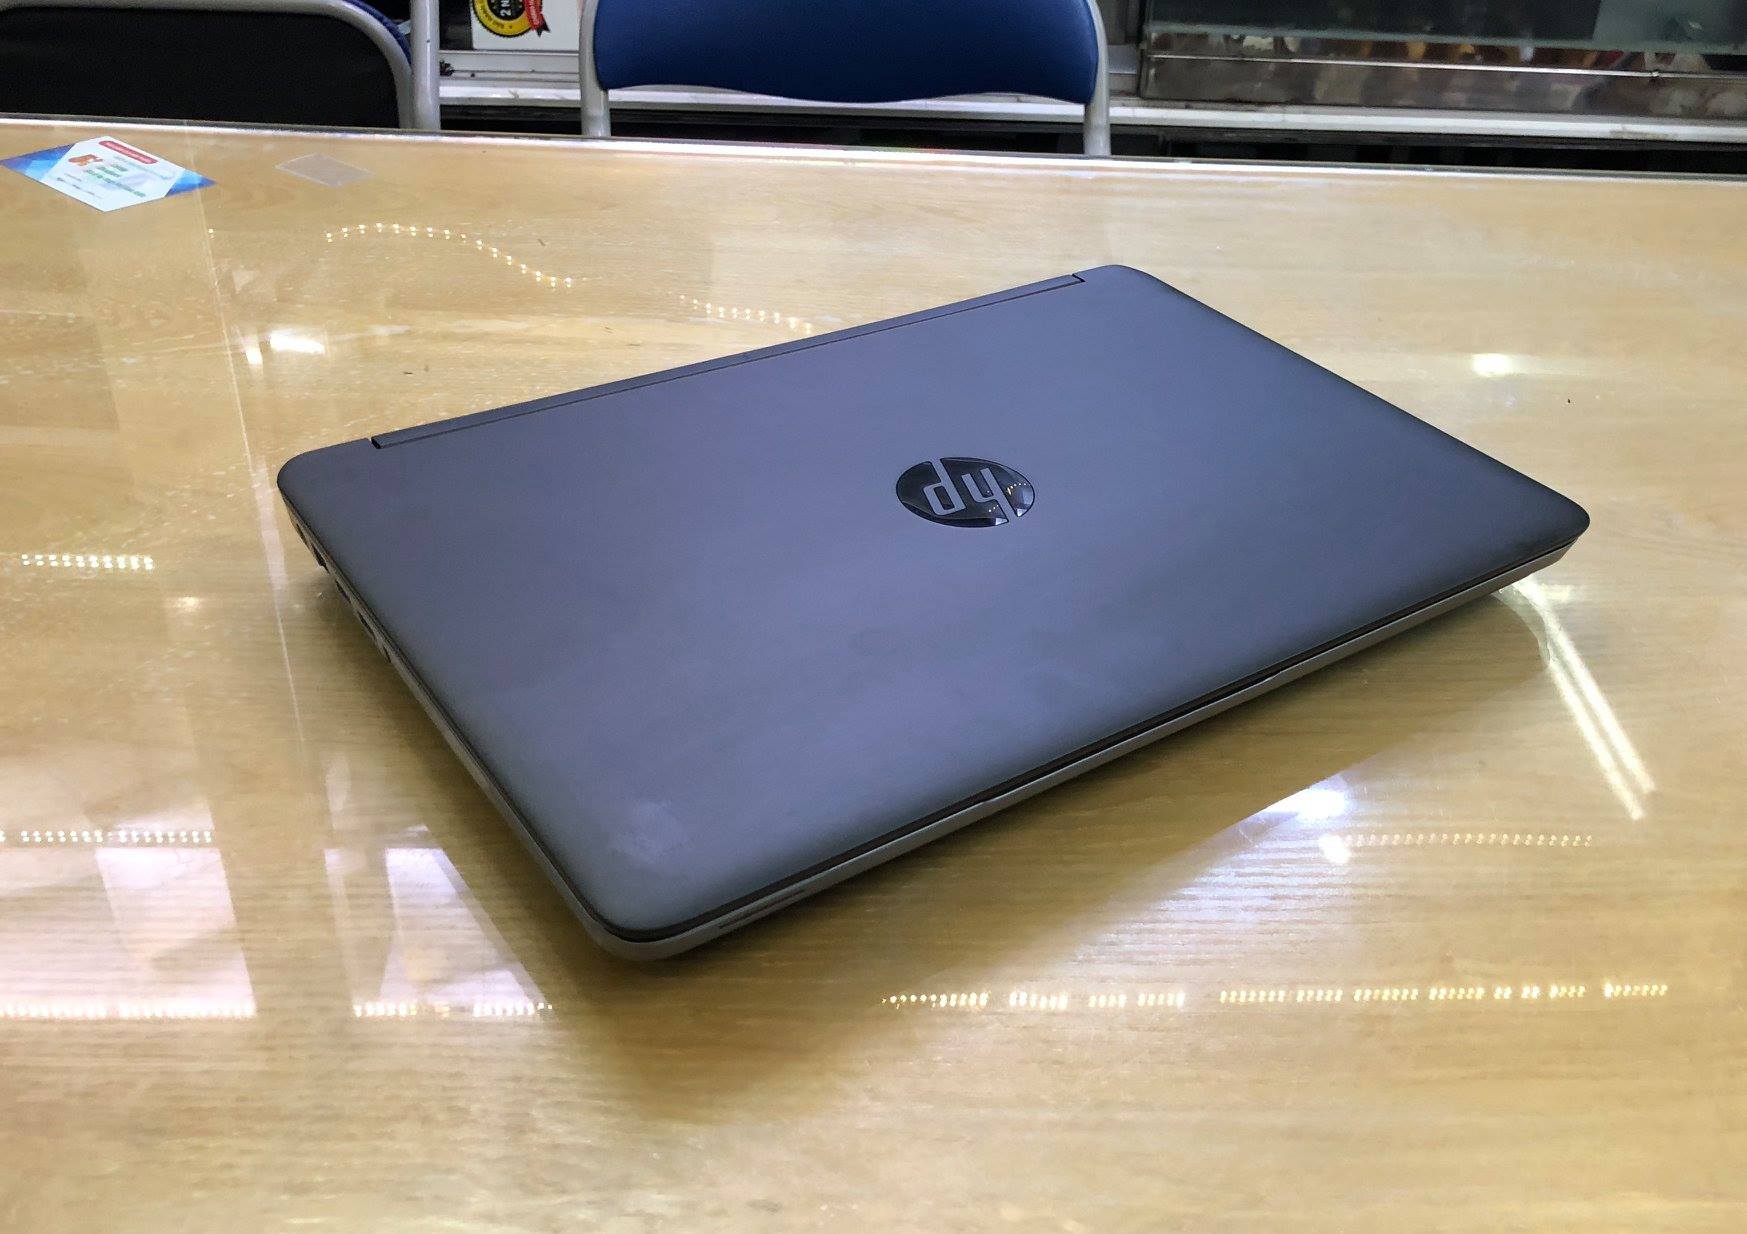  Laptop HP Probook 640 G1 .jpg